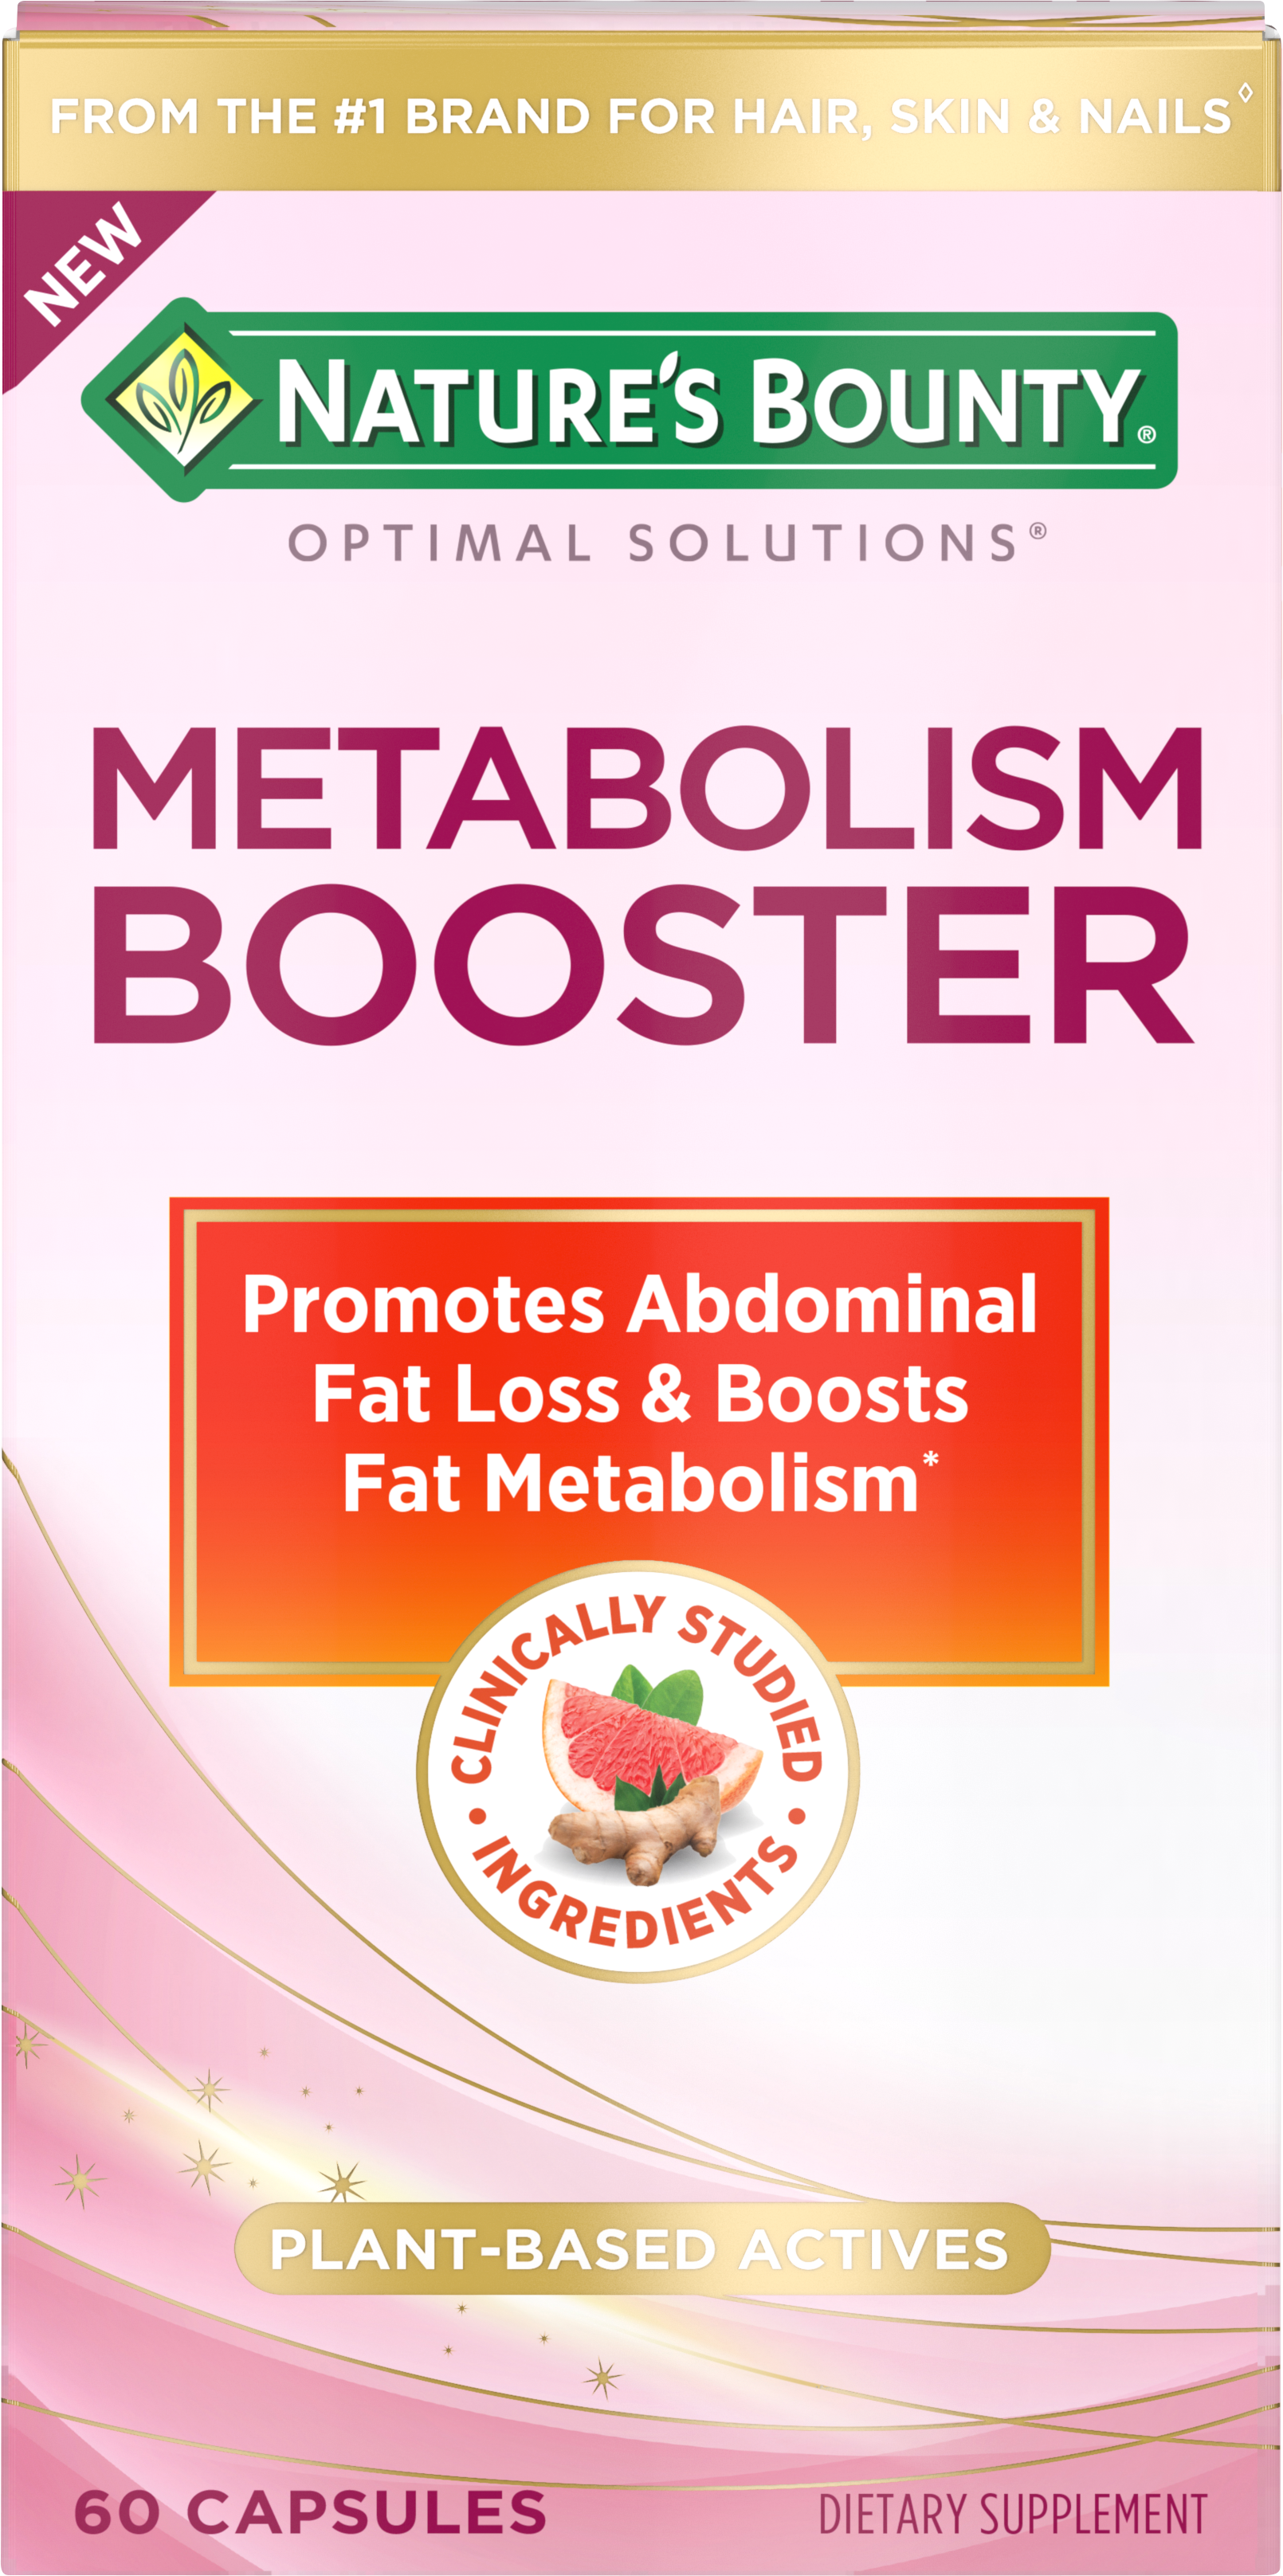 Natural metabolism booster